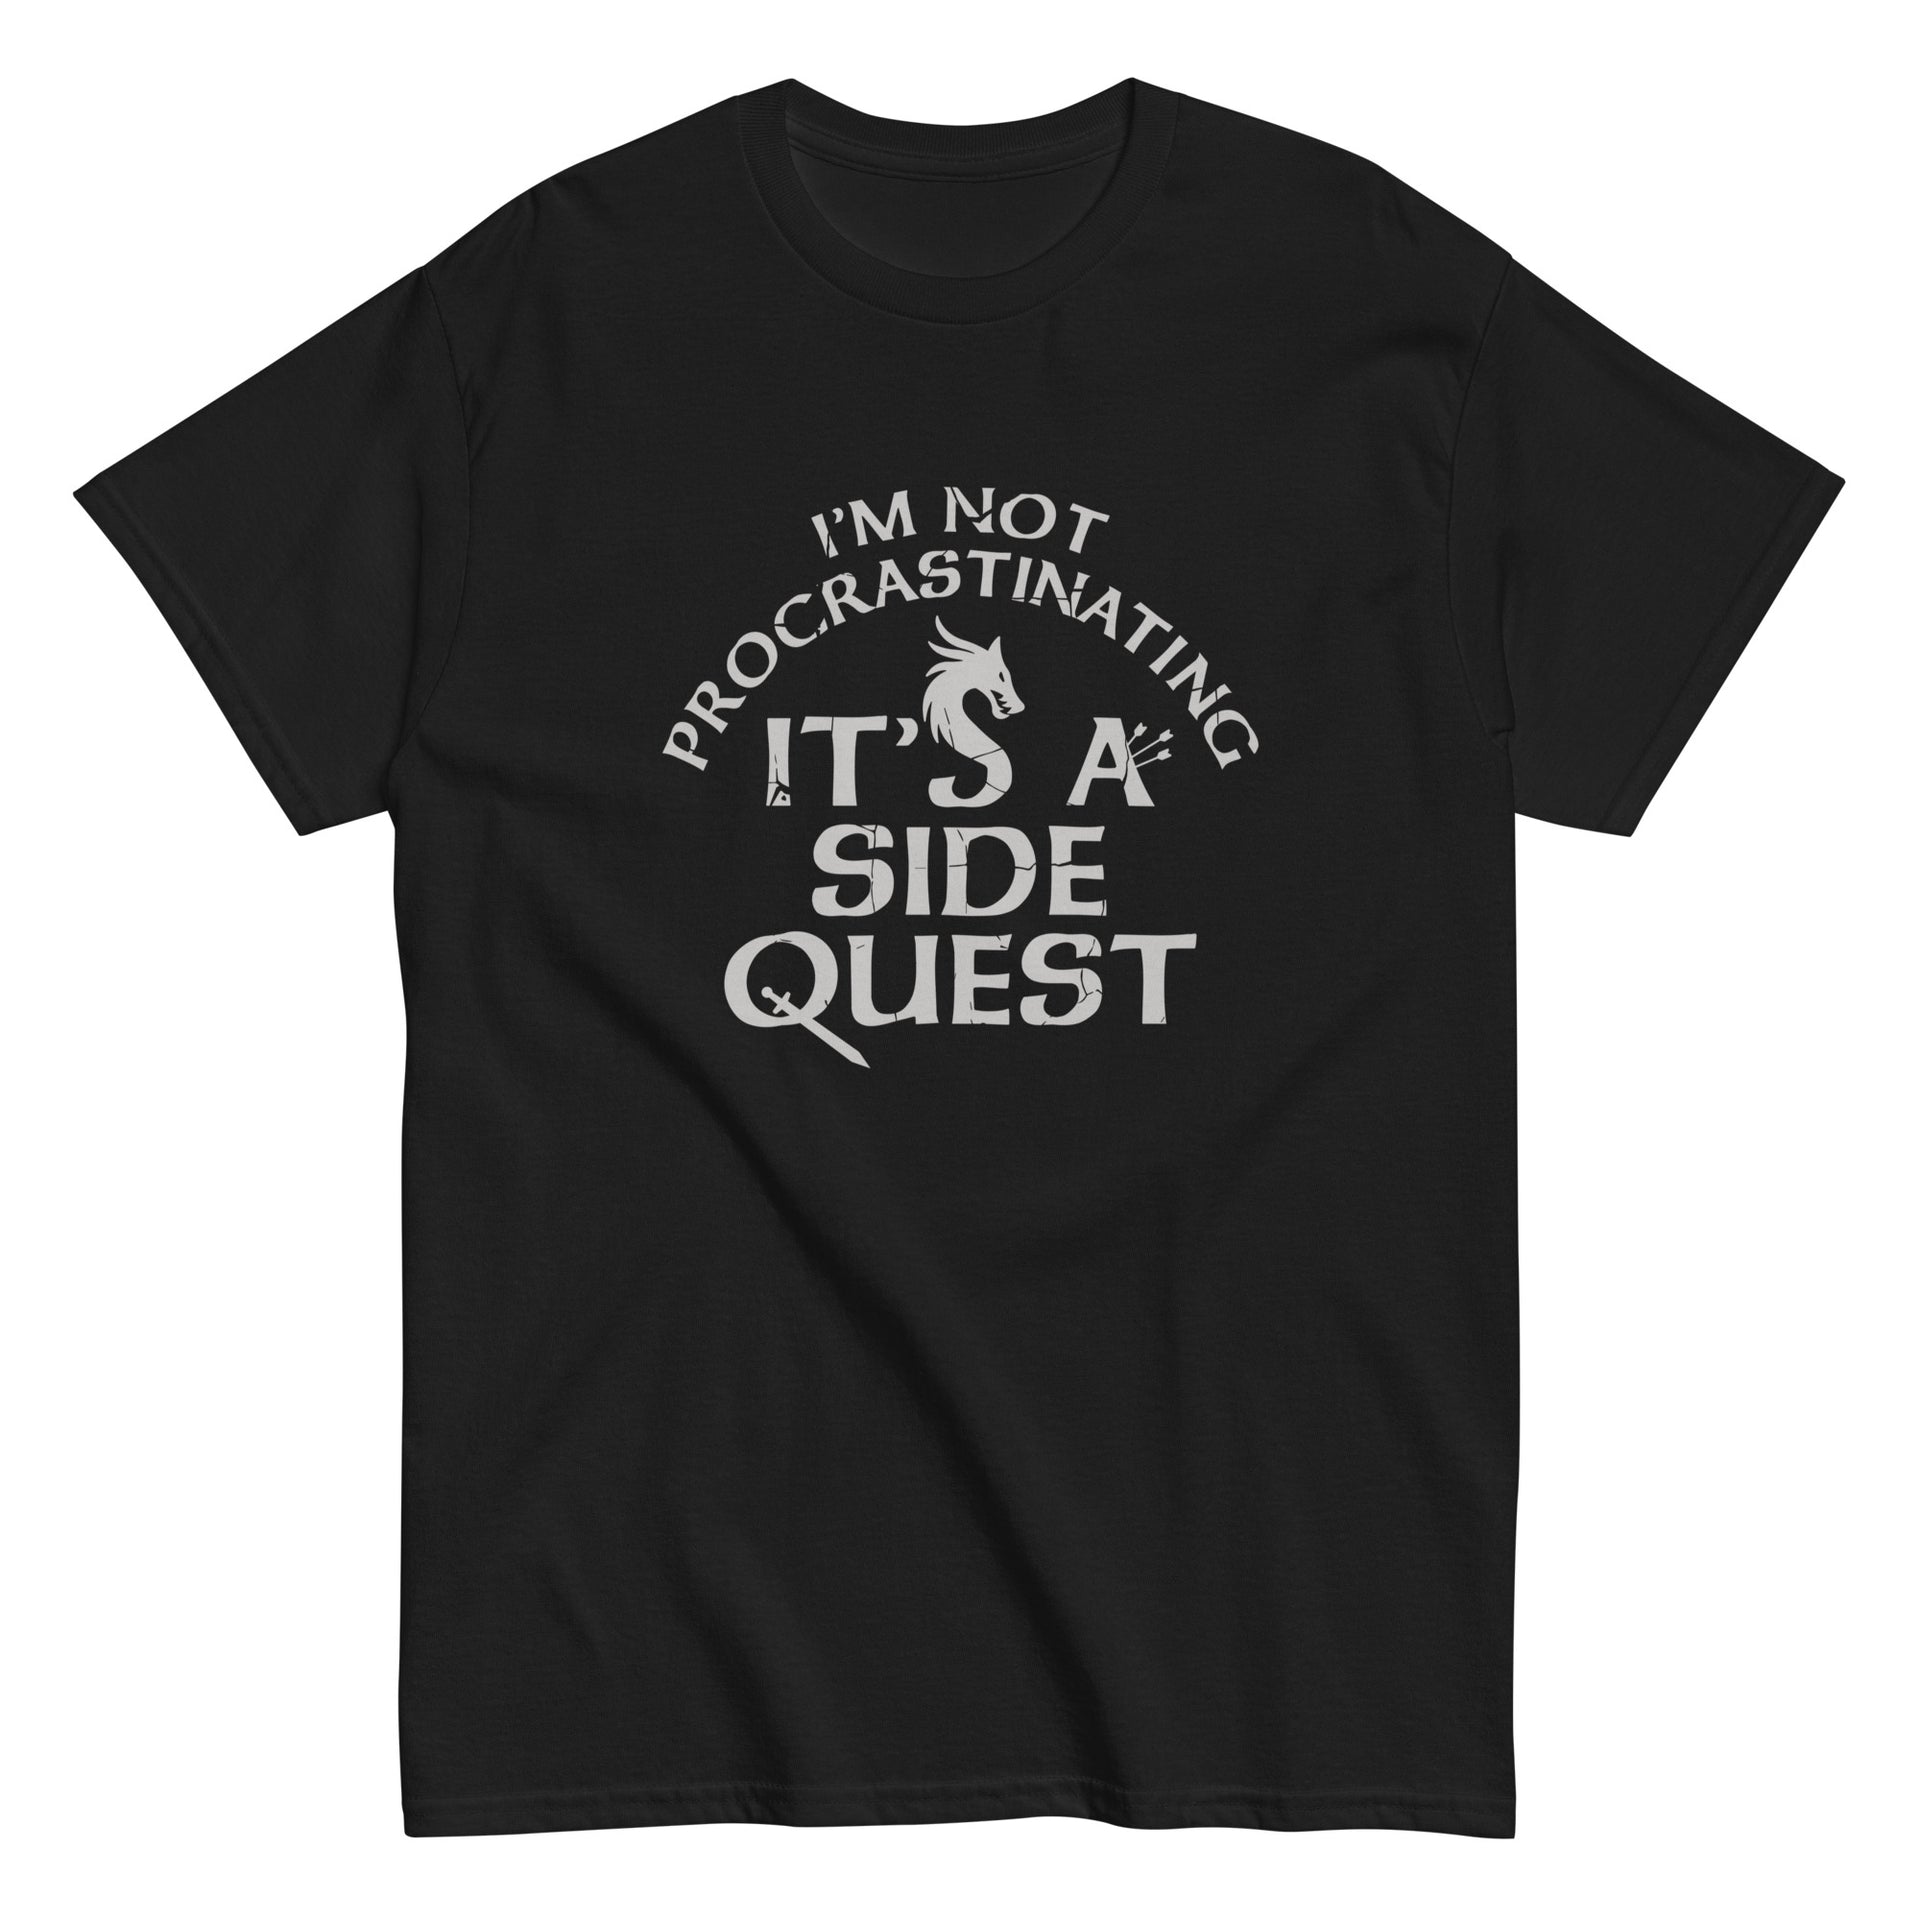 Men's Classic T-shirt in Black